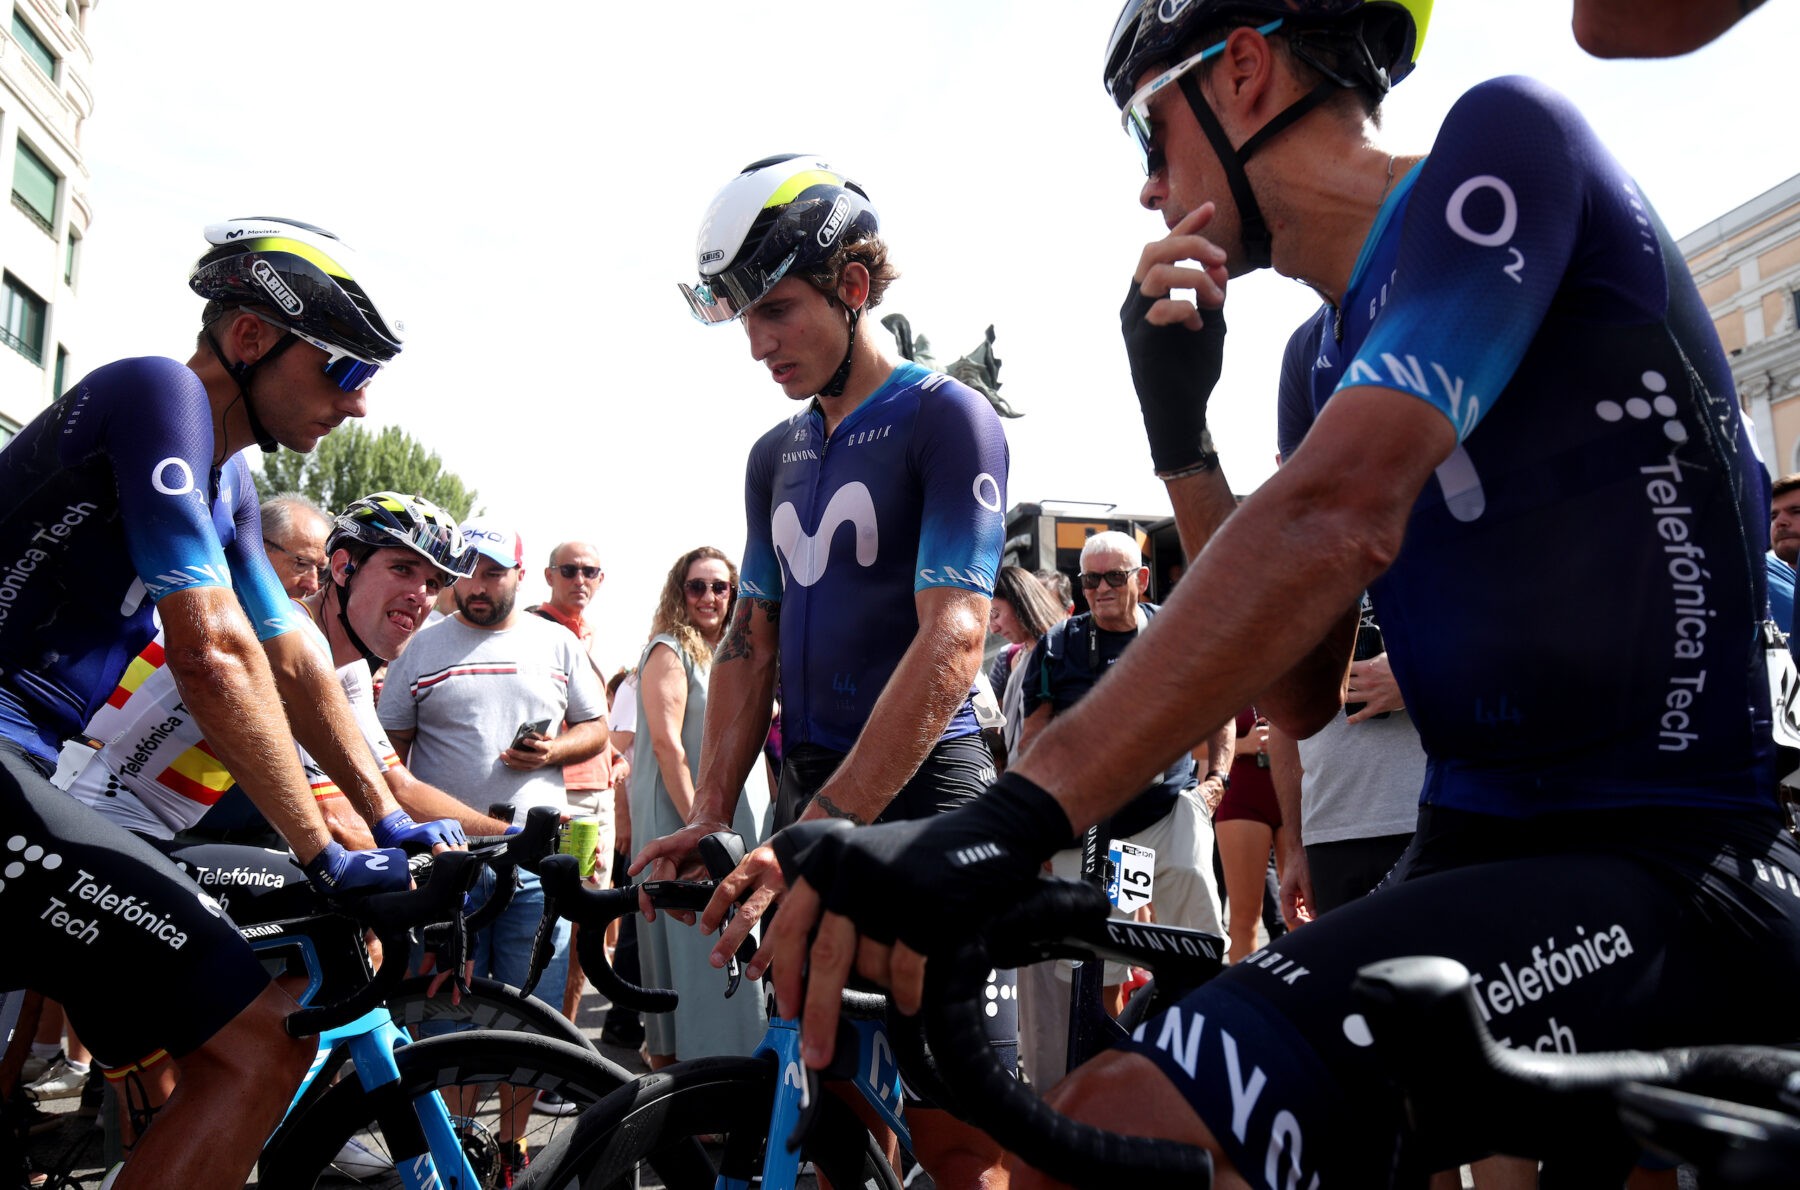 News' image‛Iván Gª Cortina (2º) acaricia la victoria en la primera etapa de la Vuelta a Burgos’